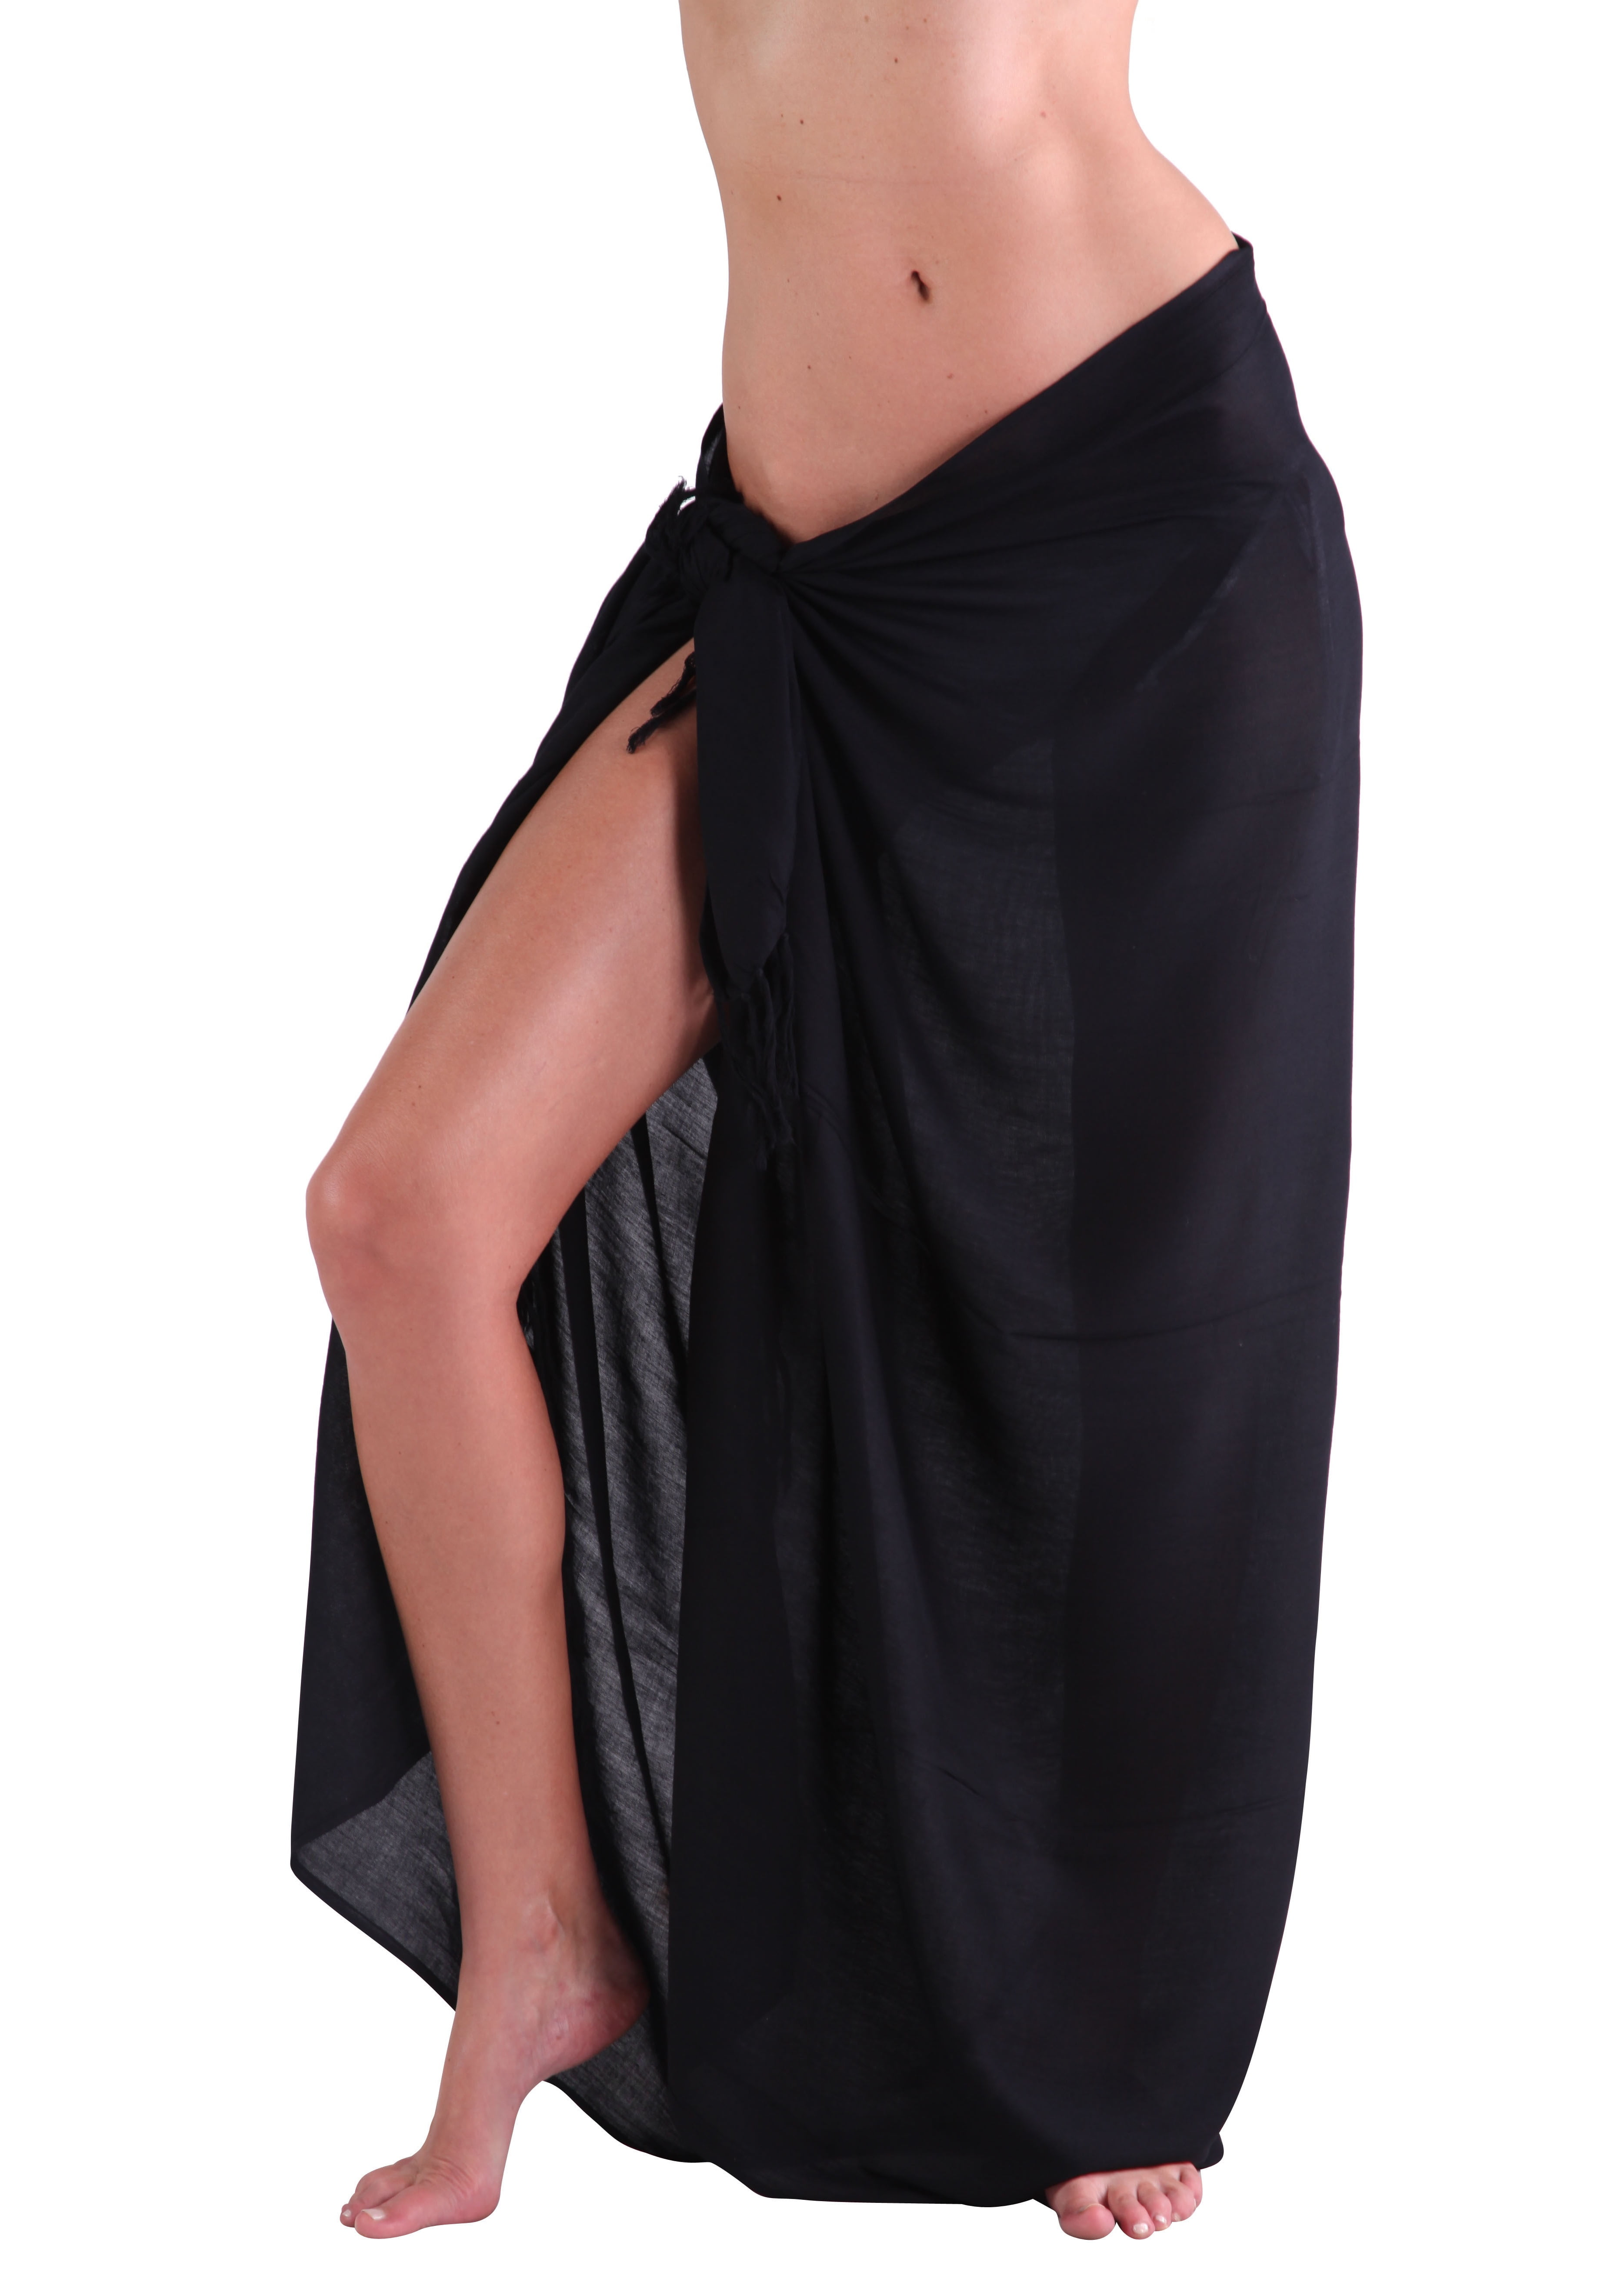 Сайт накидка. Саронг женский. Sarong. Палантин на купальник. Pareo skirt Wrap women image.